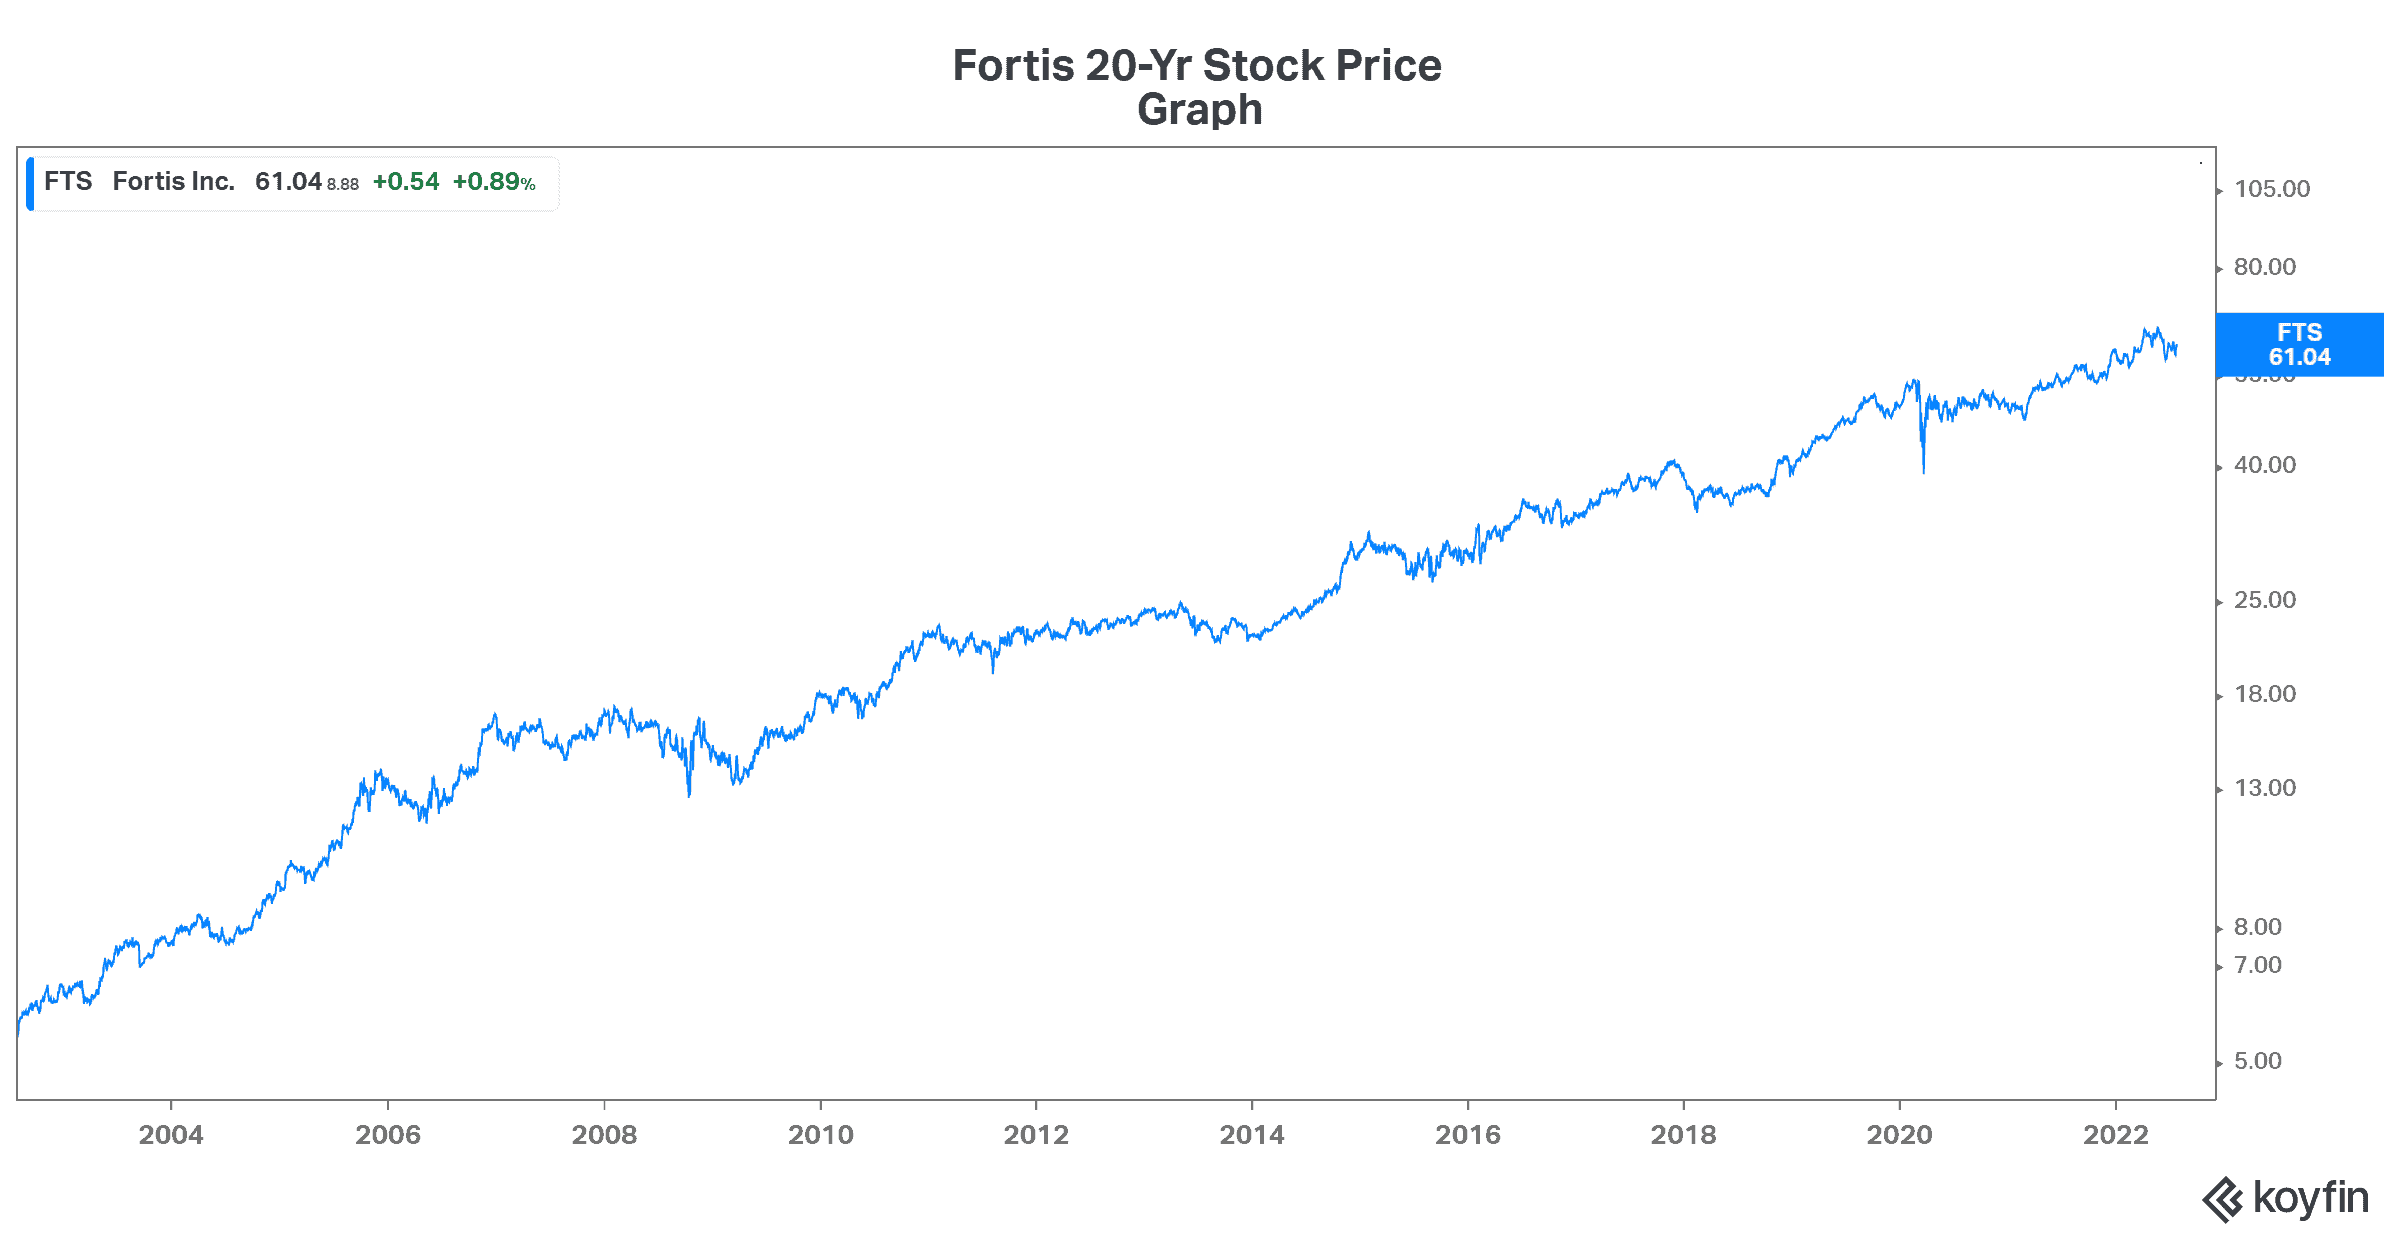 Fortis stock price